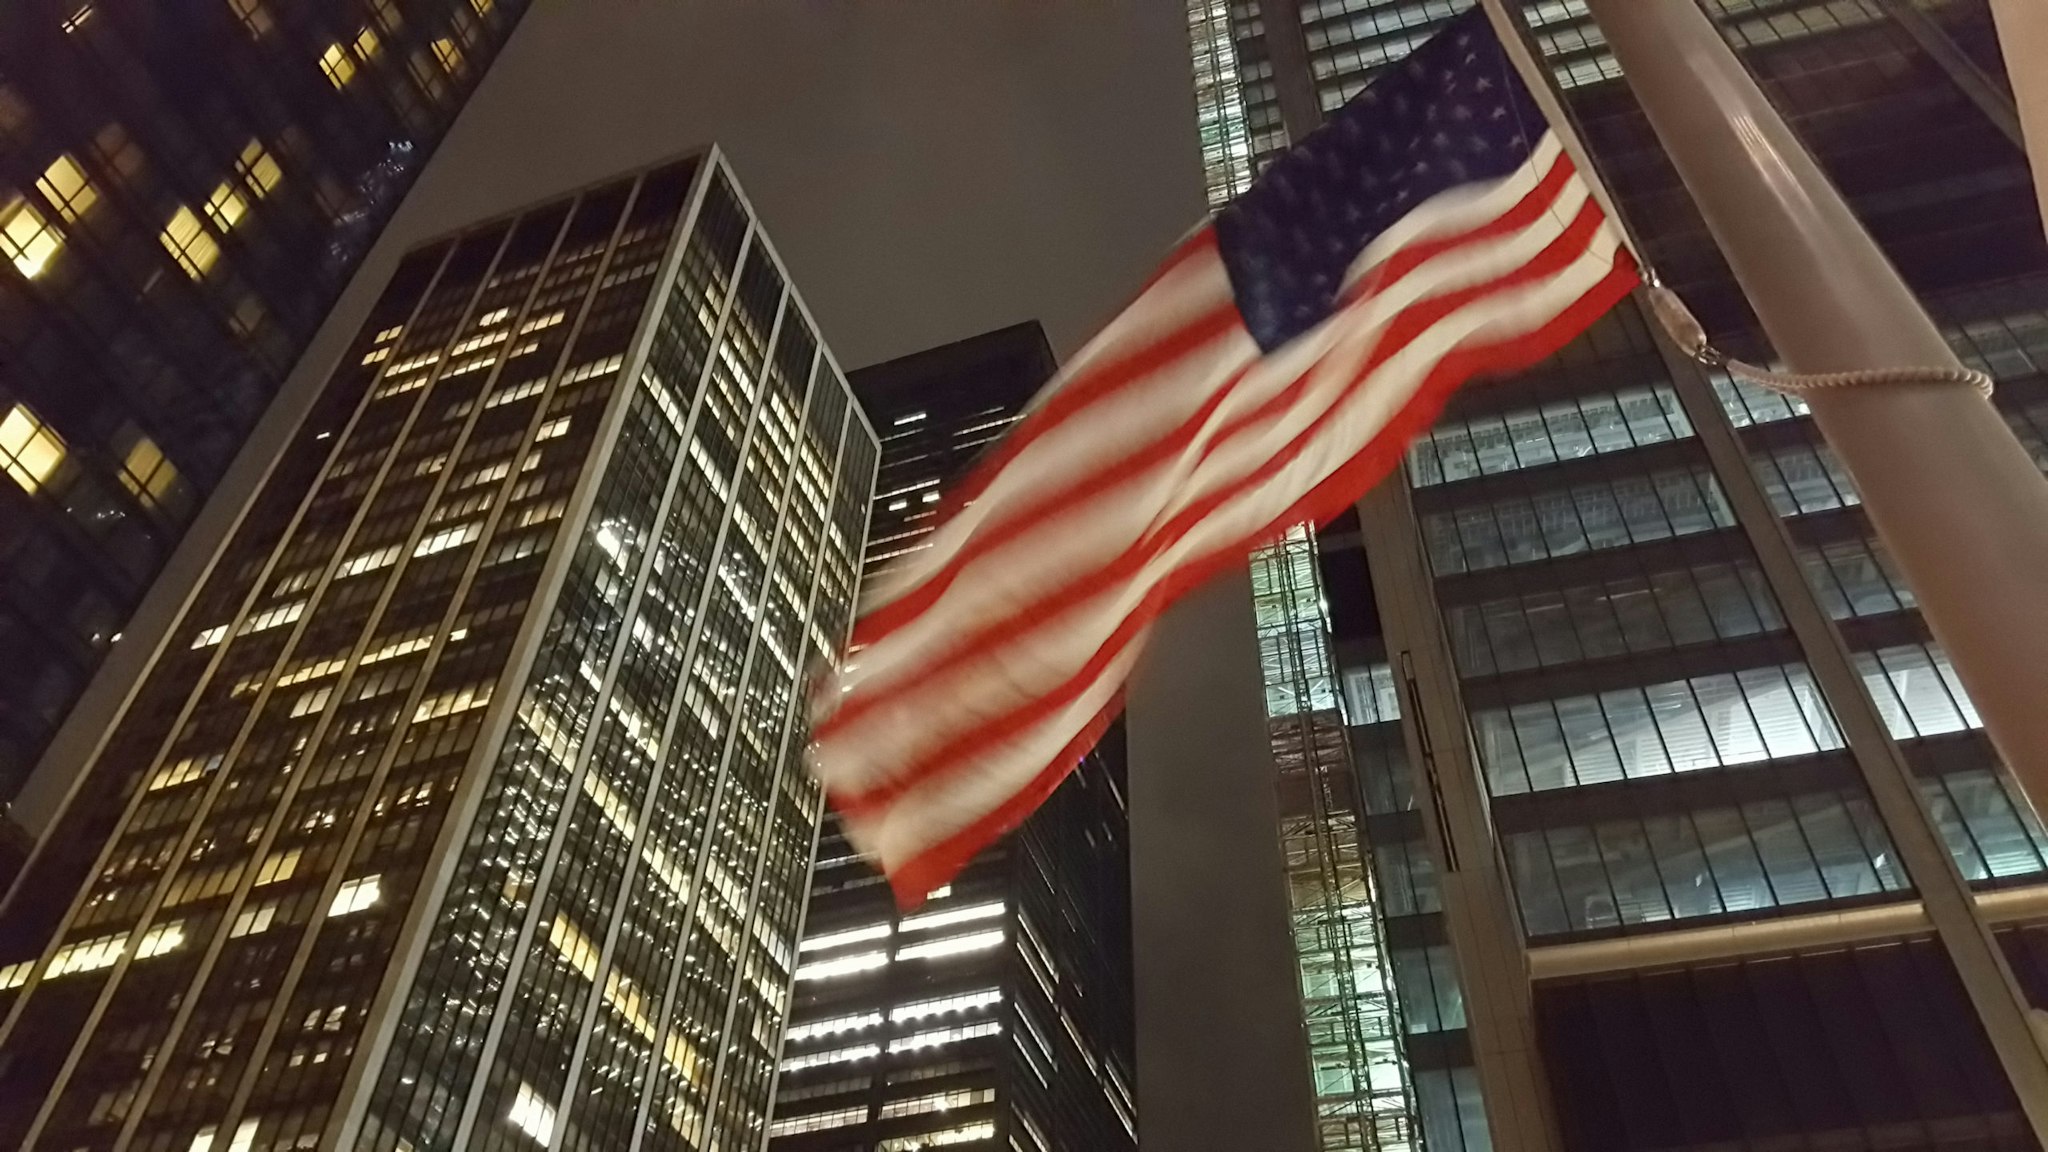 American flag at Ground Zero, World Trade Center Site, Lower Manhattan, at night. New York City, USA